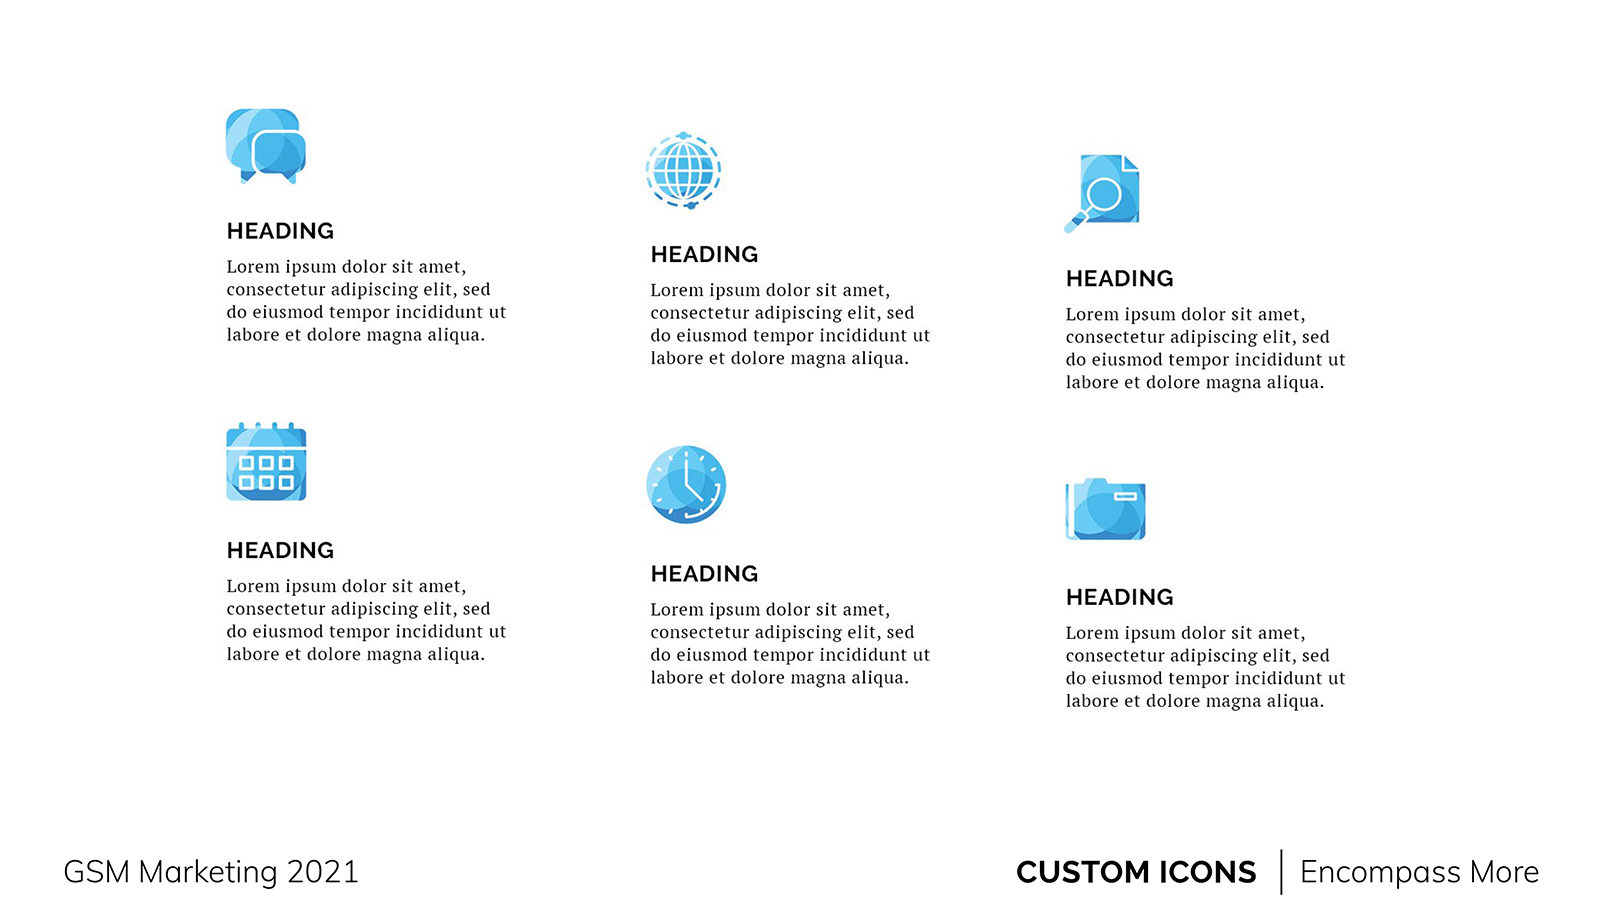 Concept slide: Encompass More custom icon style